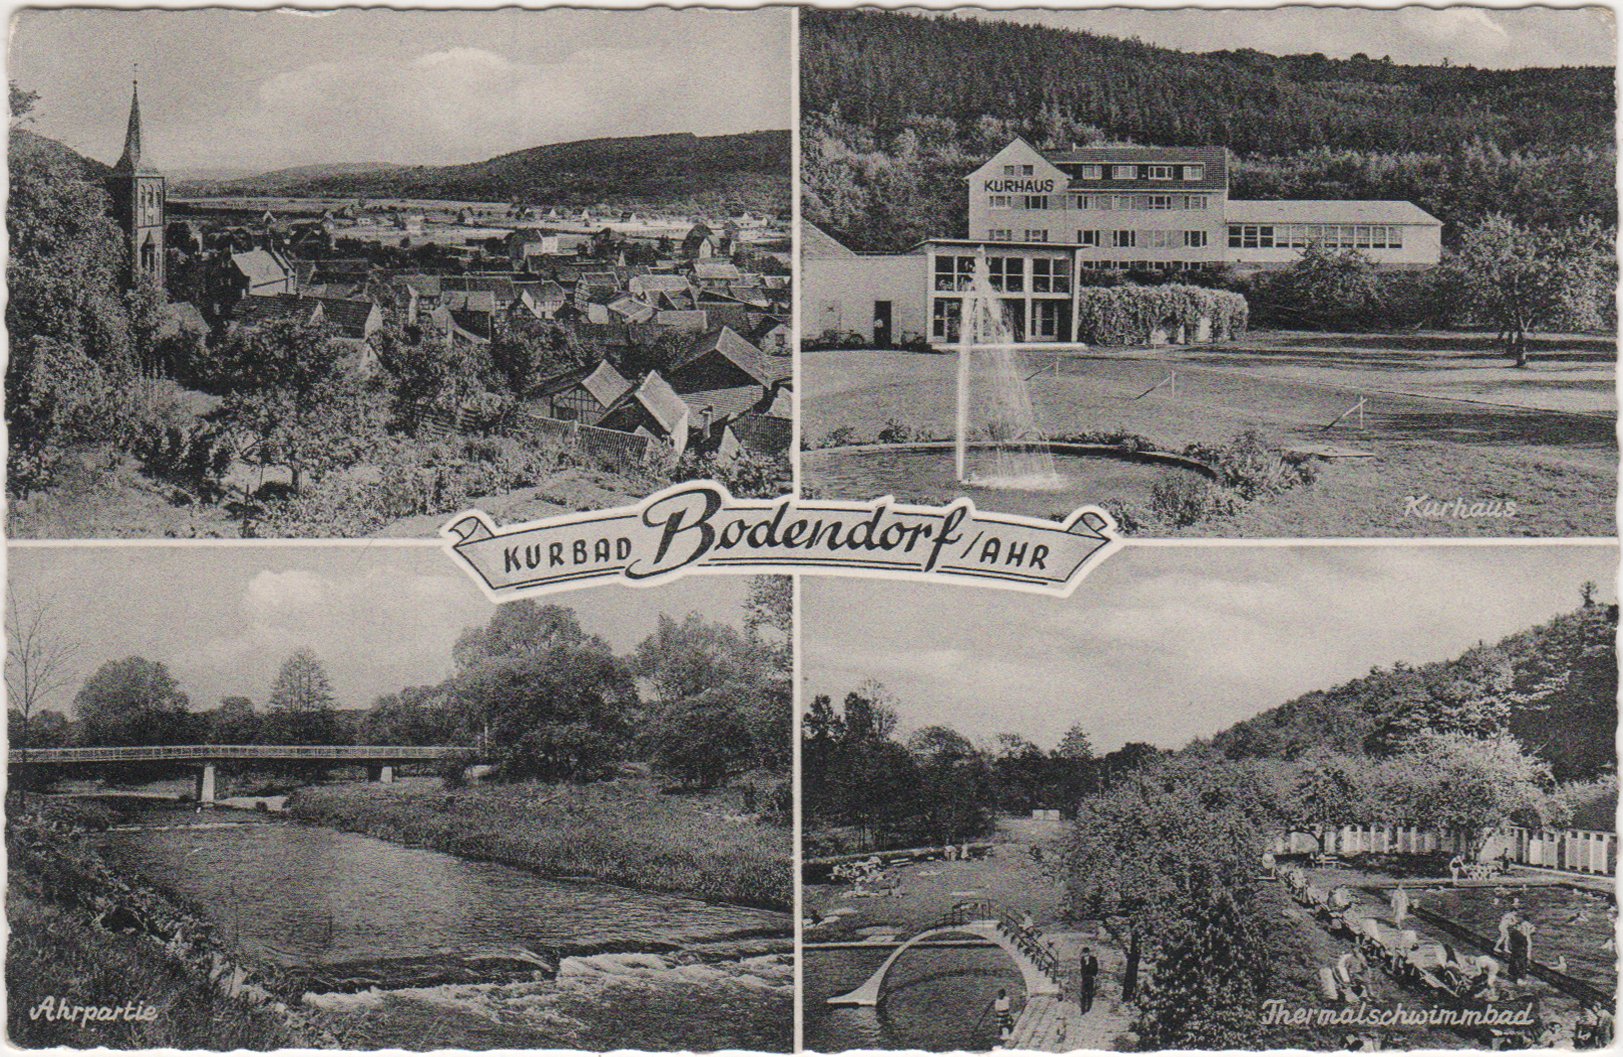 Ansichtskarte Kurbad Bodendorf/Ahr ~1955 (Cekade CC BY-NC-SA)